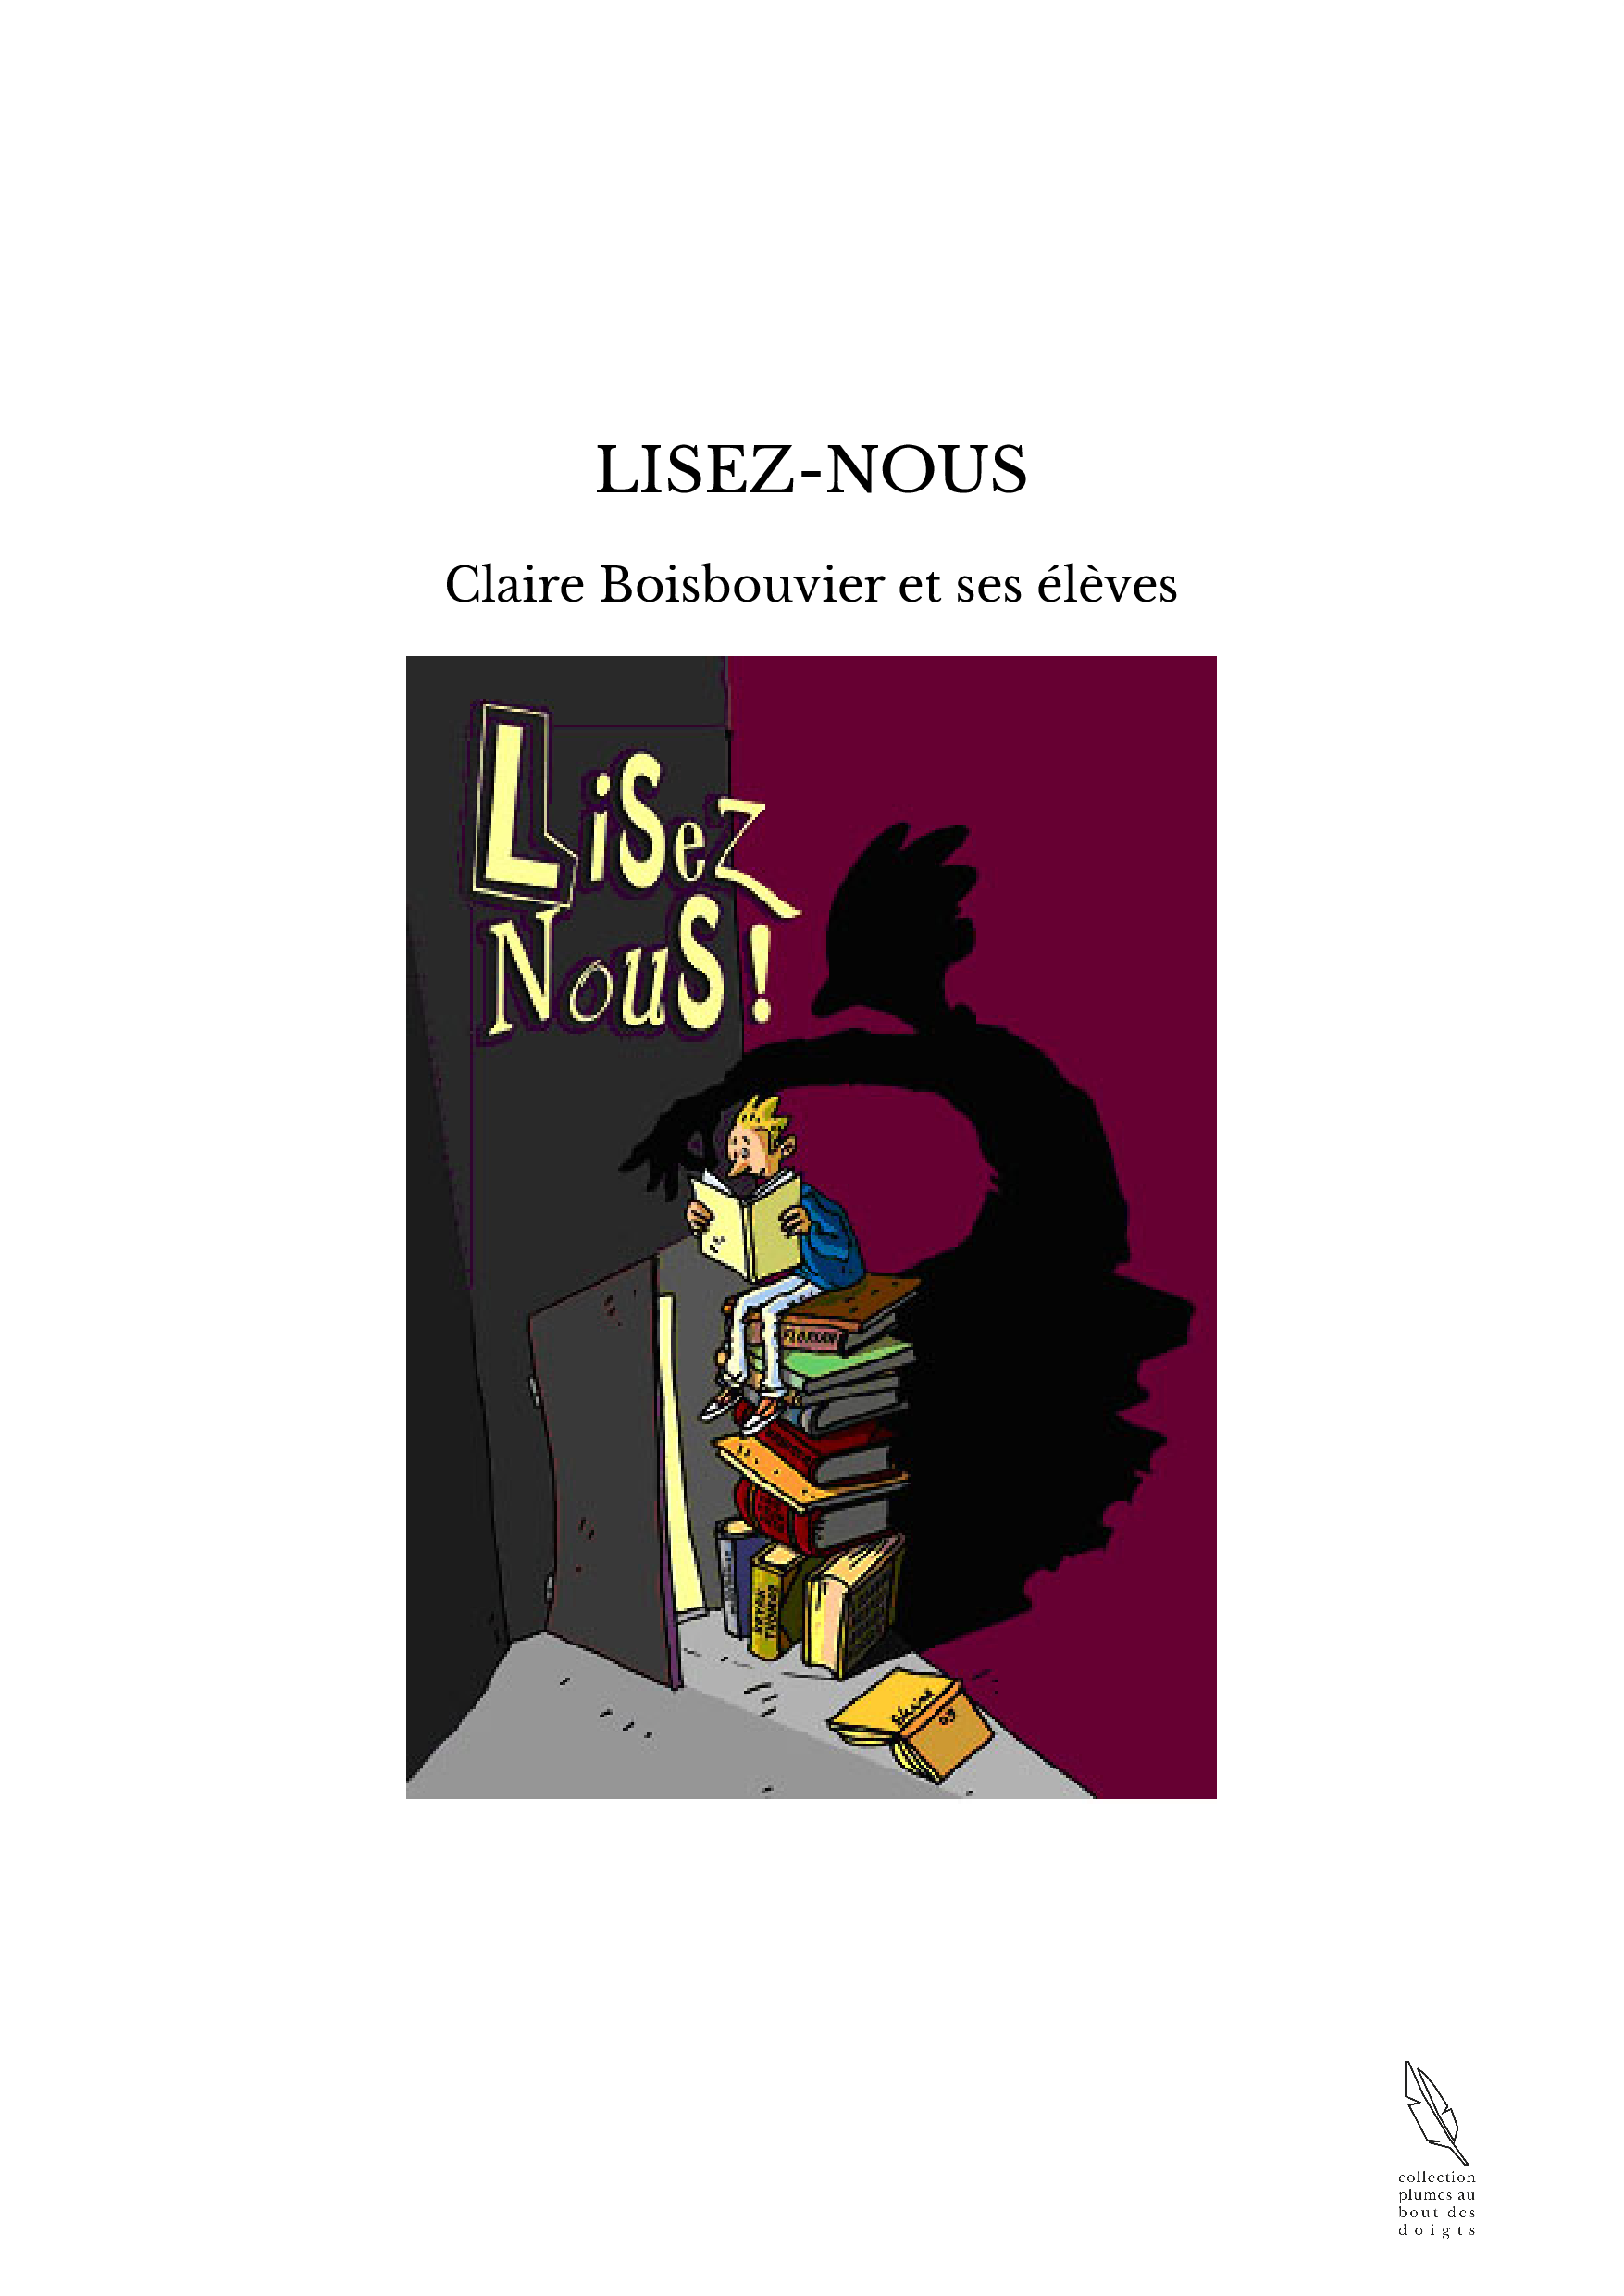 LISEZ-NOUS